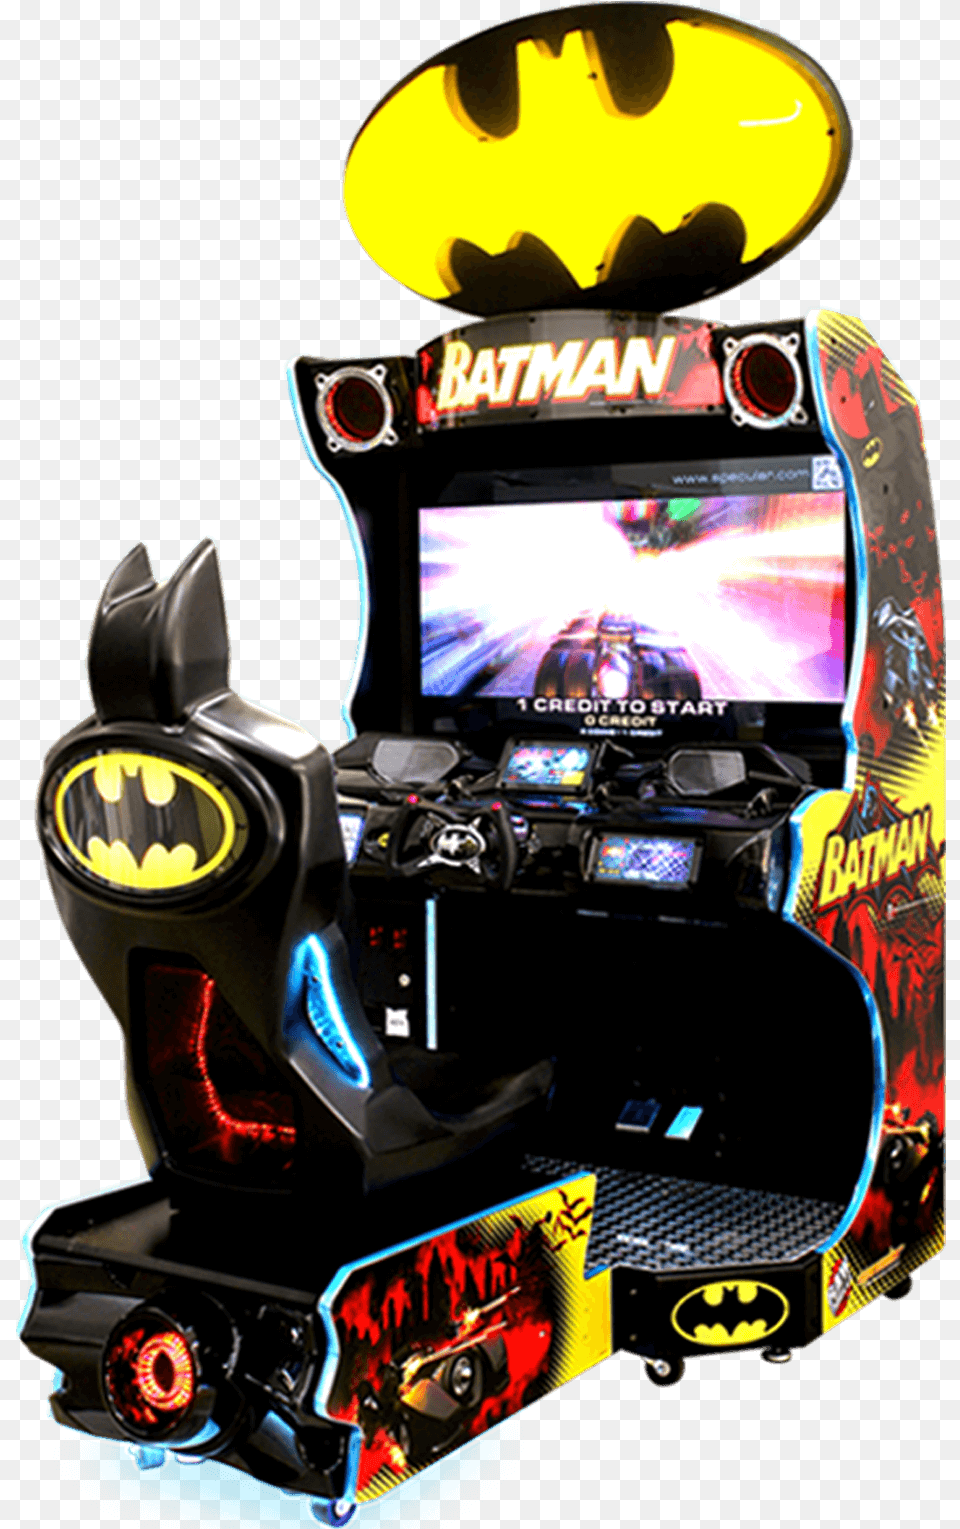 Arcade Games U2013 Batman By Unis Universal Space Arcade Batman, Arcade Game Machine, Game, Machine, Wheel Png